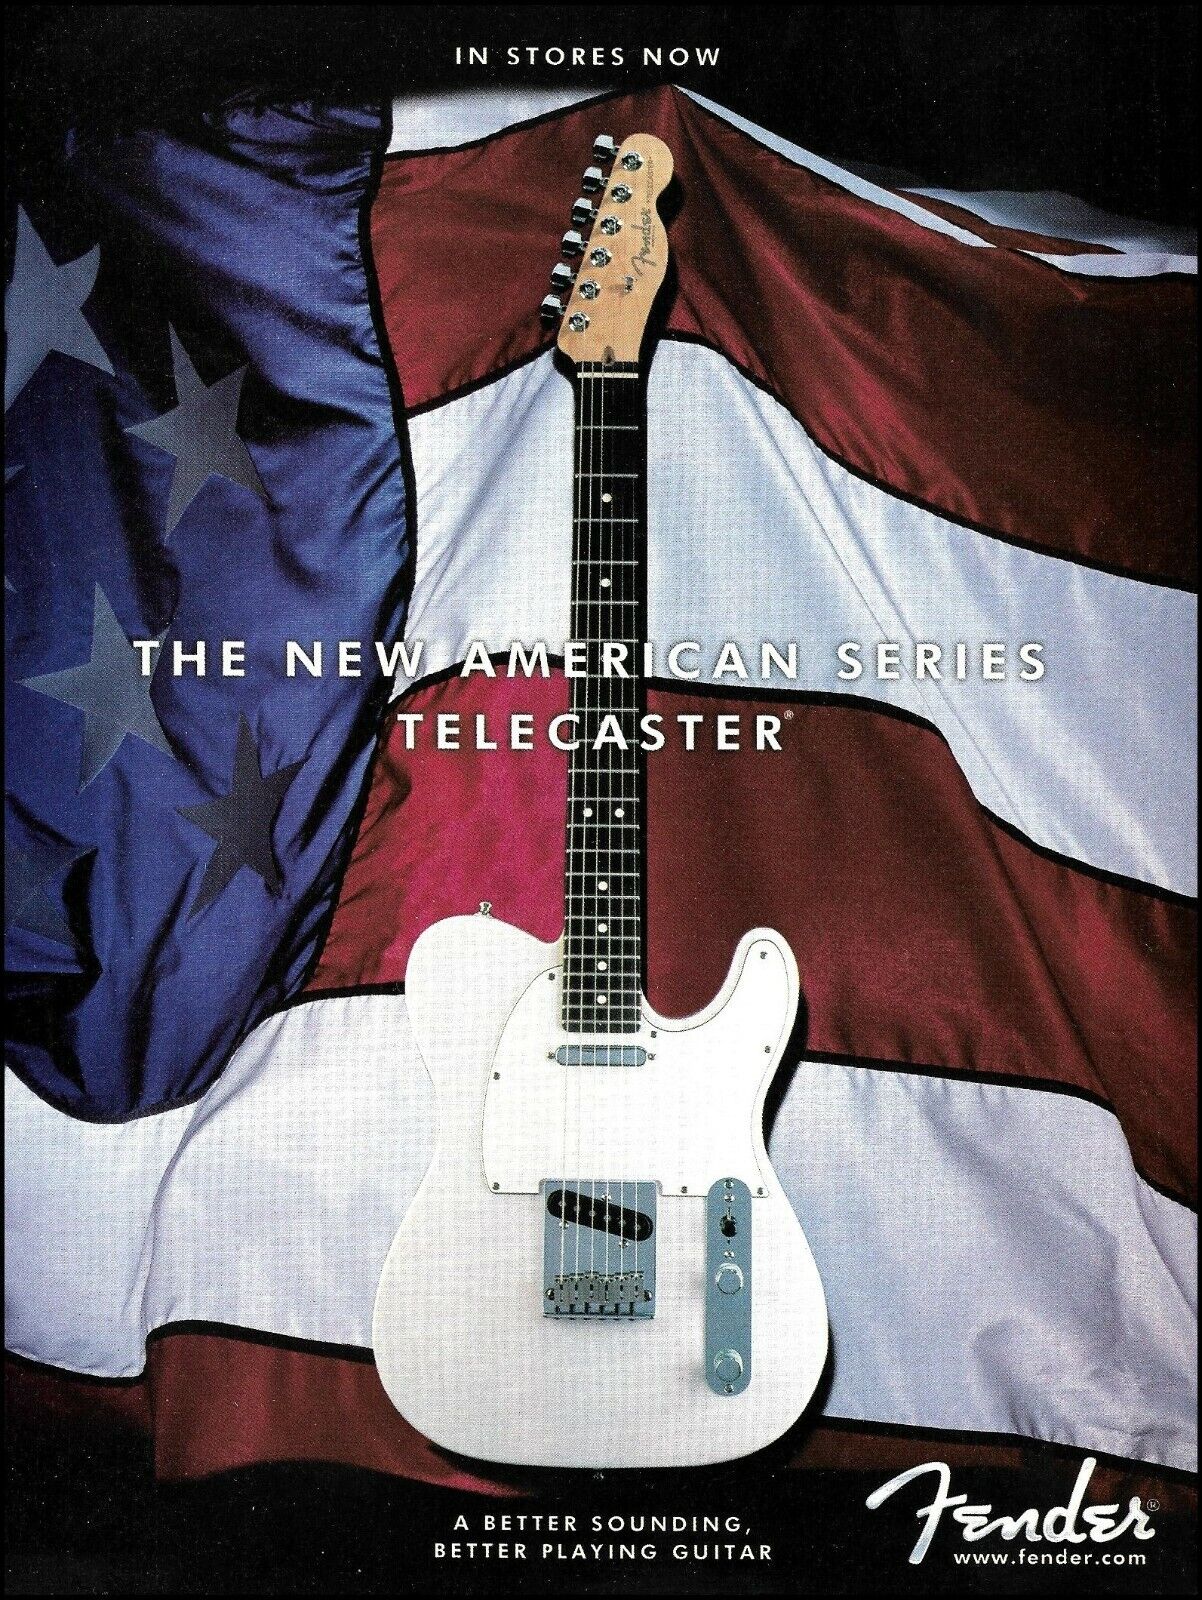 Fender American Series White Telecaster guitar ad 2000 advertisement print